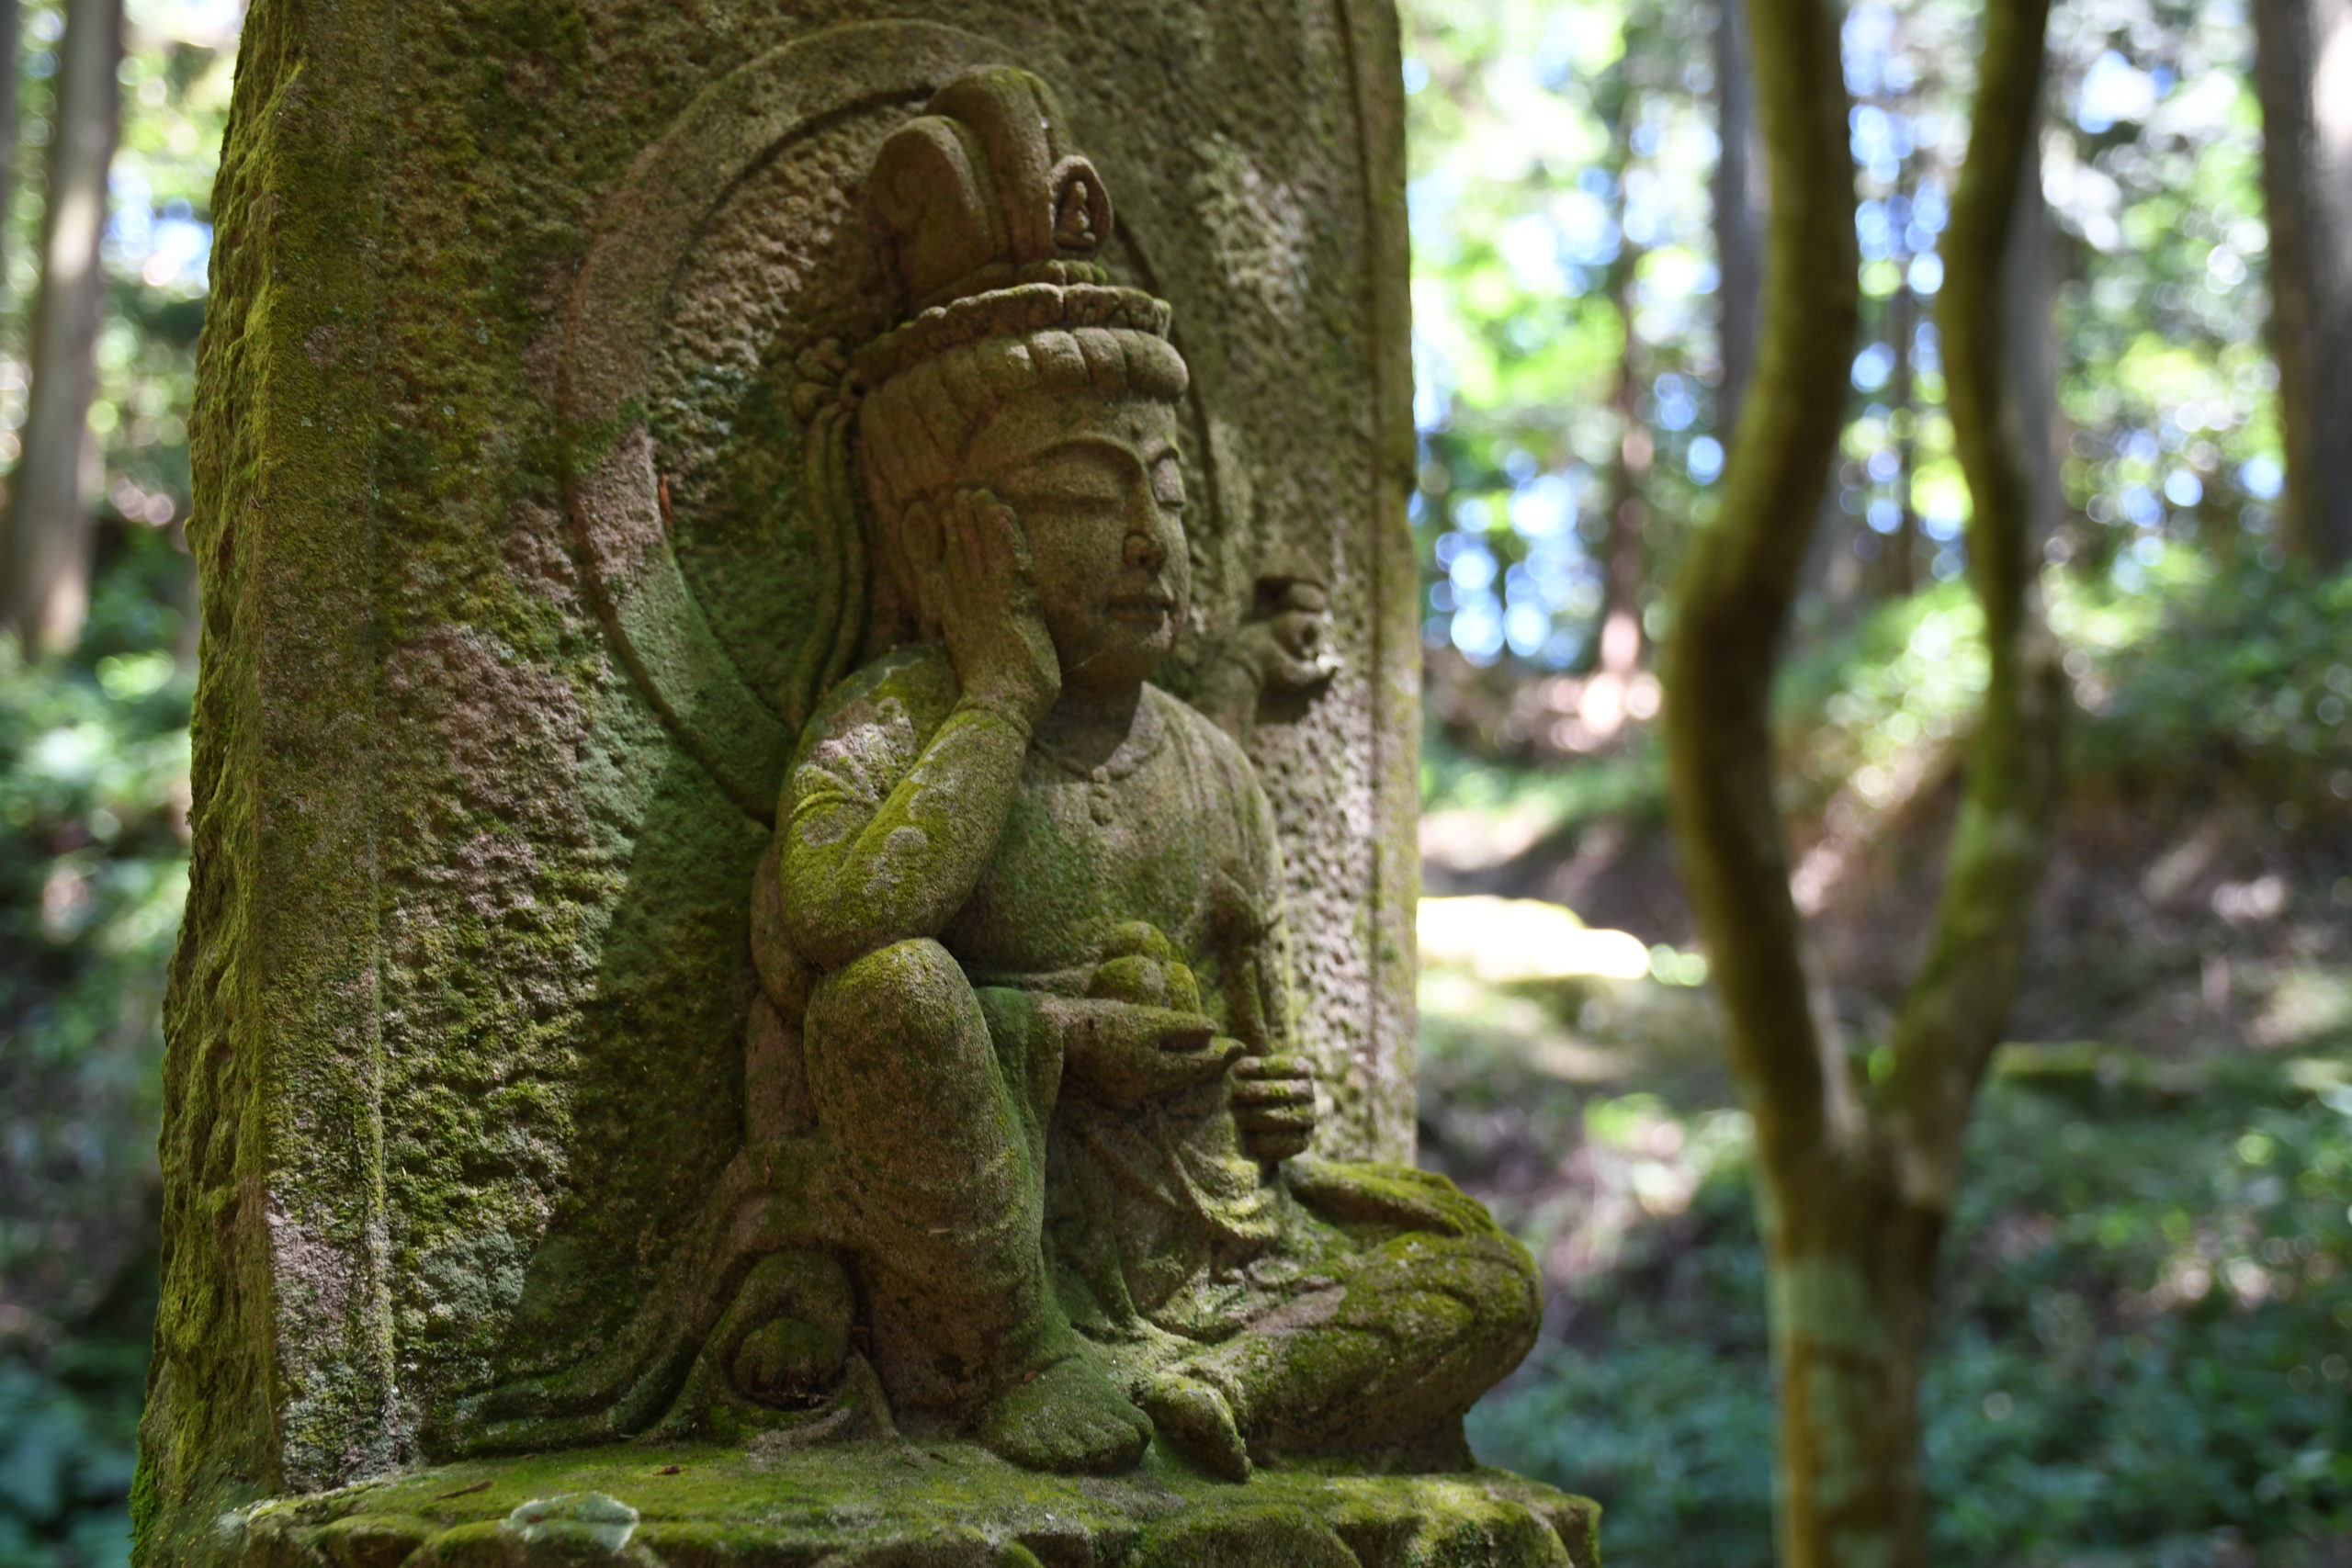 Stone Buddhist image - Anywhere